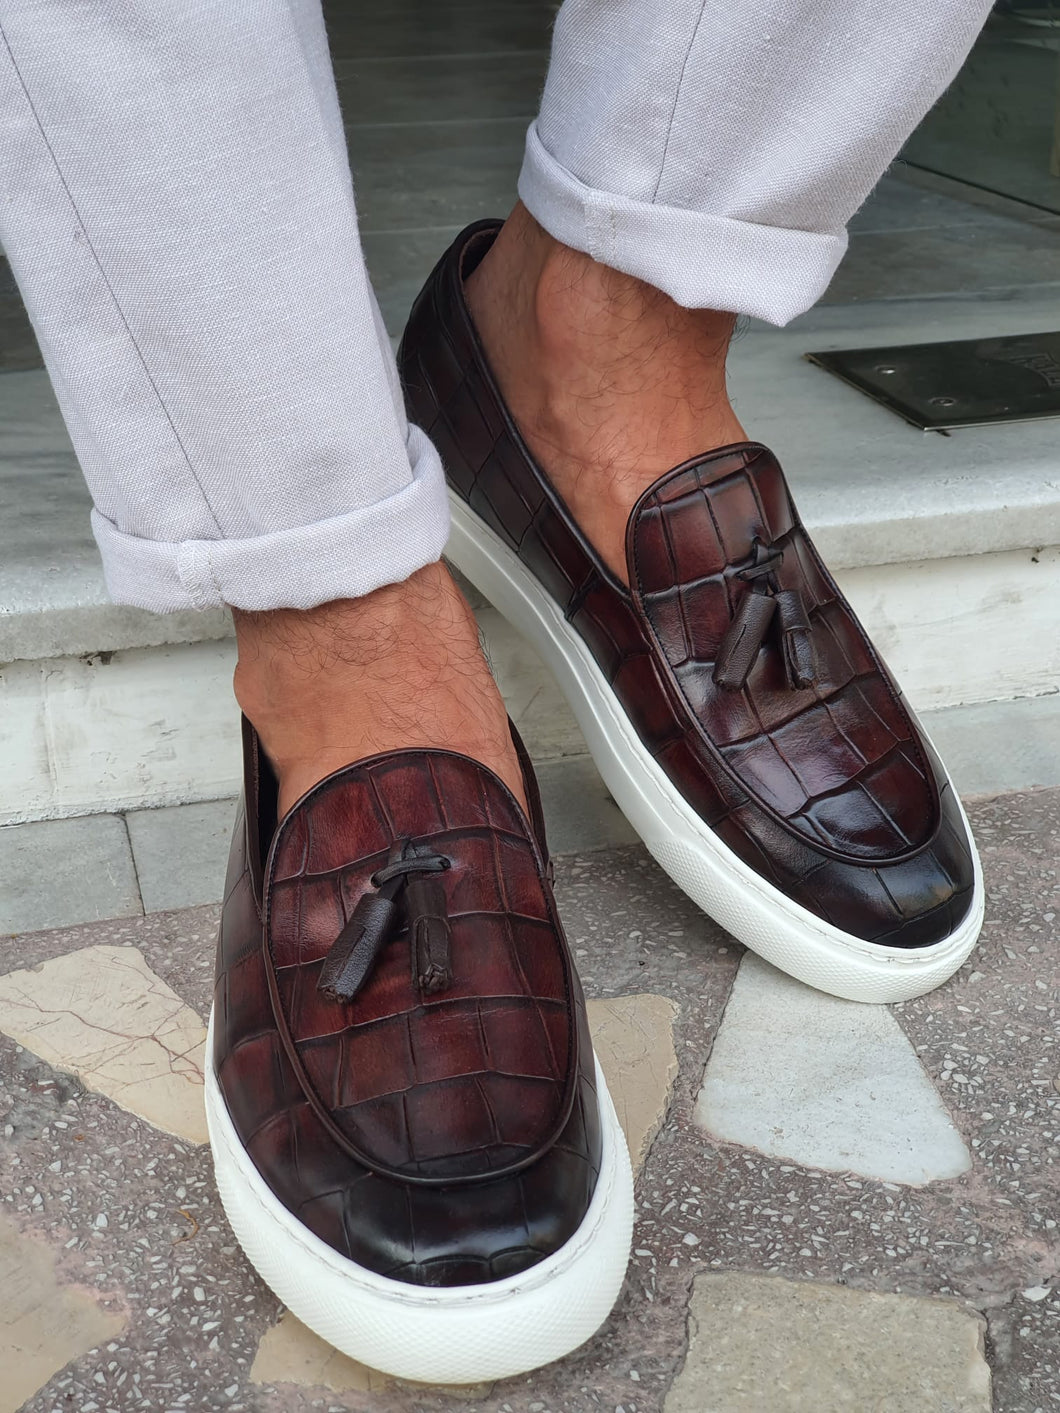 Chase Sardinelli Eva Sole Croc Tasseled Brown Leather Shoes